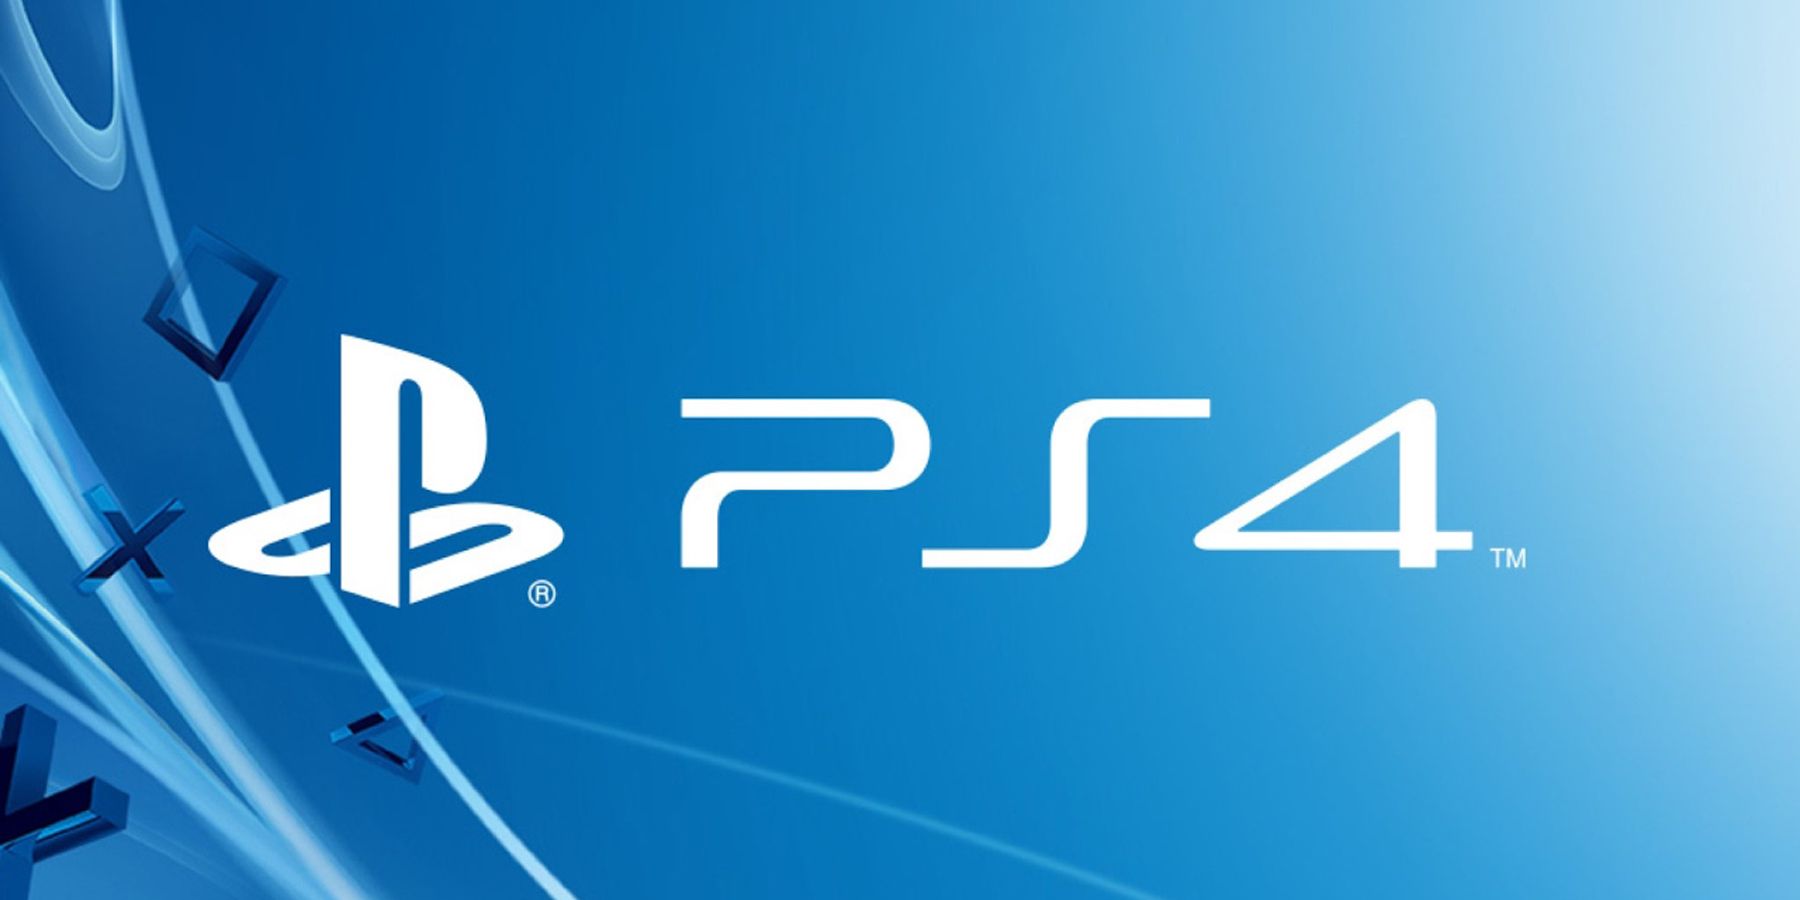 PlayStation 4 log